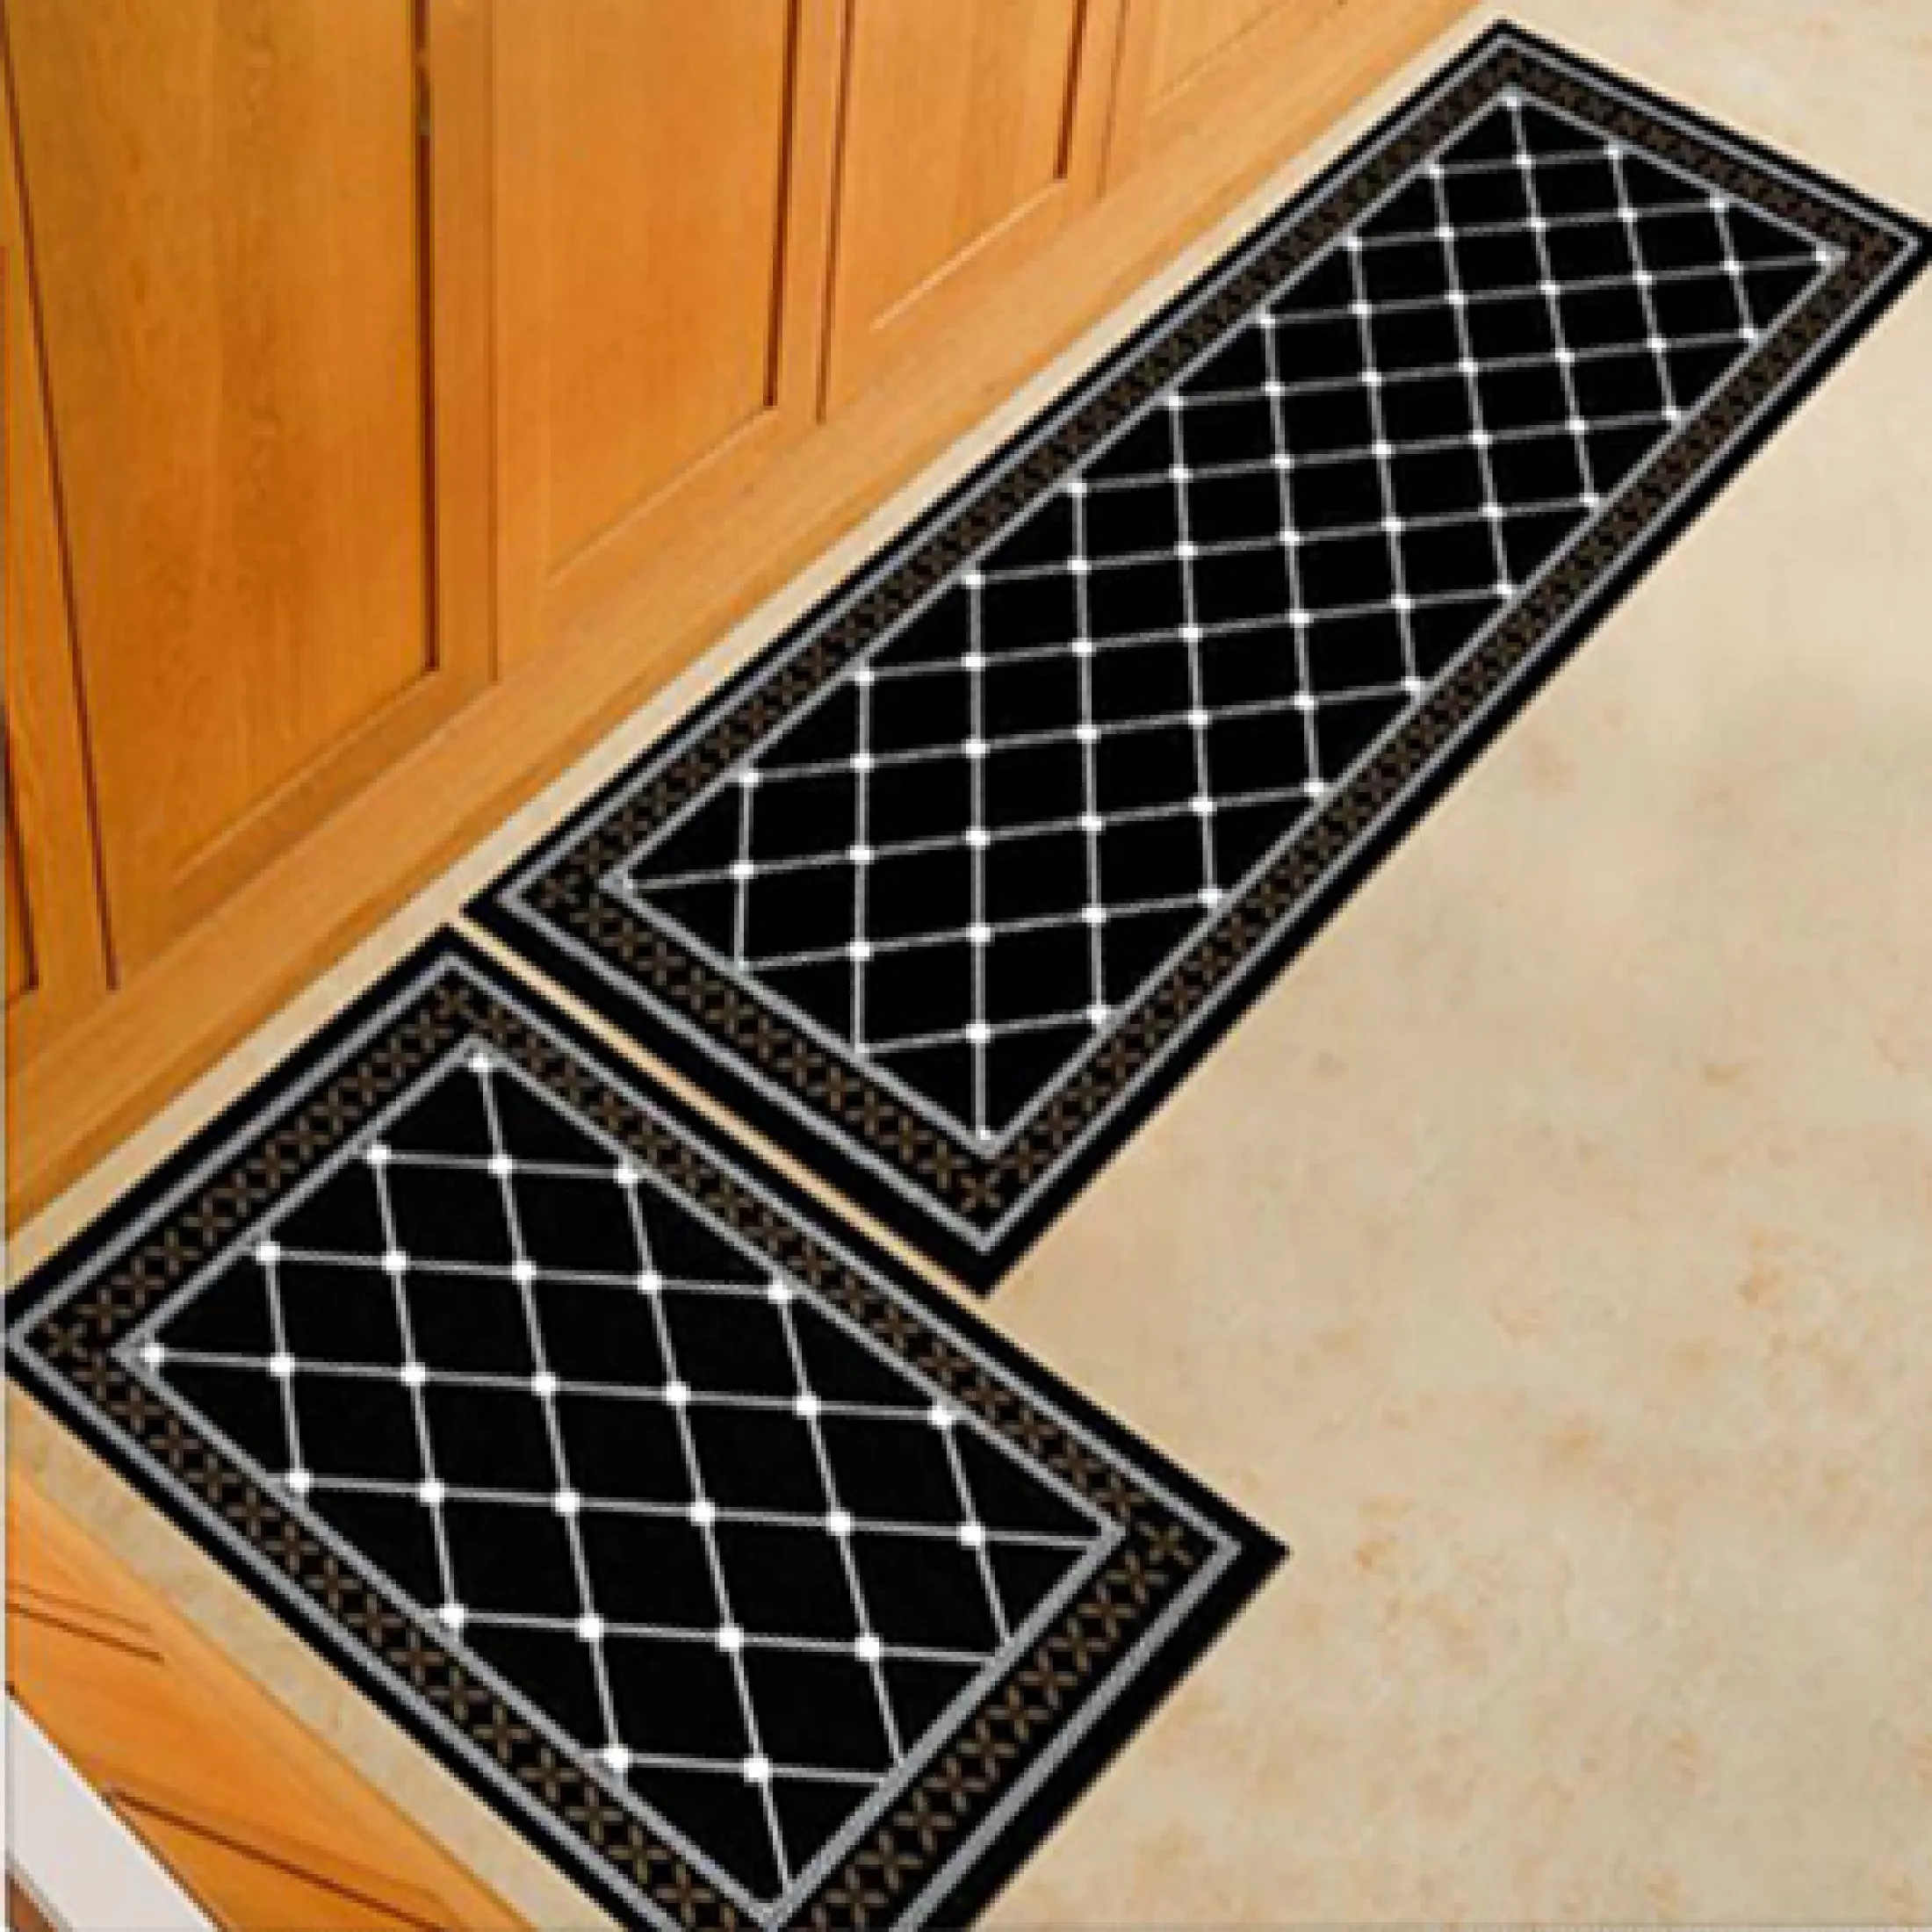 Floormat004 2in1 Non Slip Kitchen, Entrance Rugs For Hardwood Floors In Kitchen